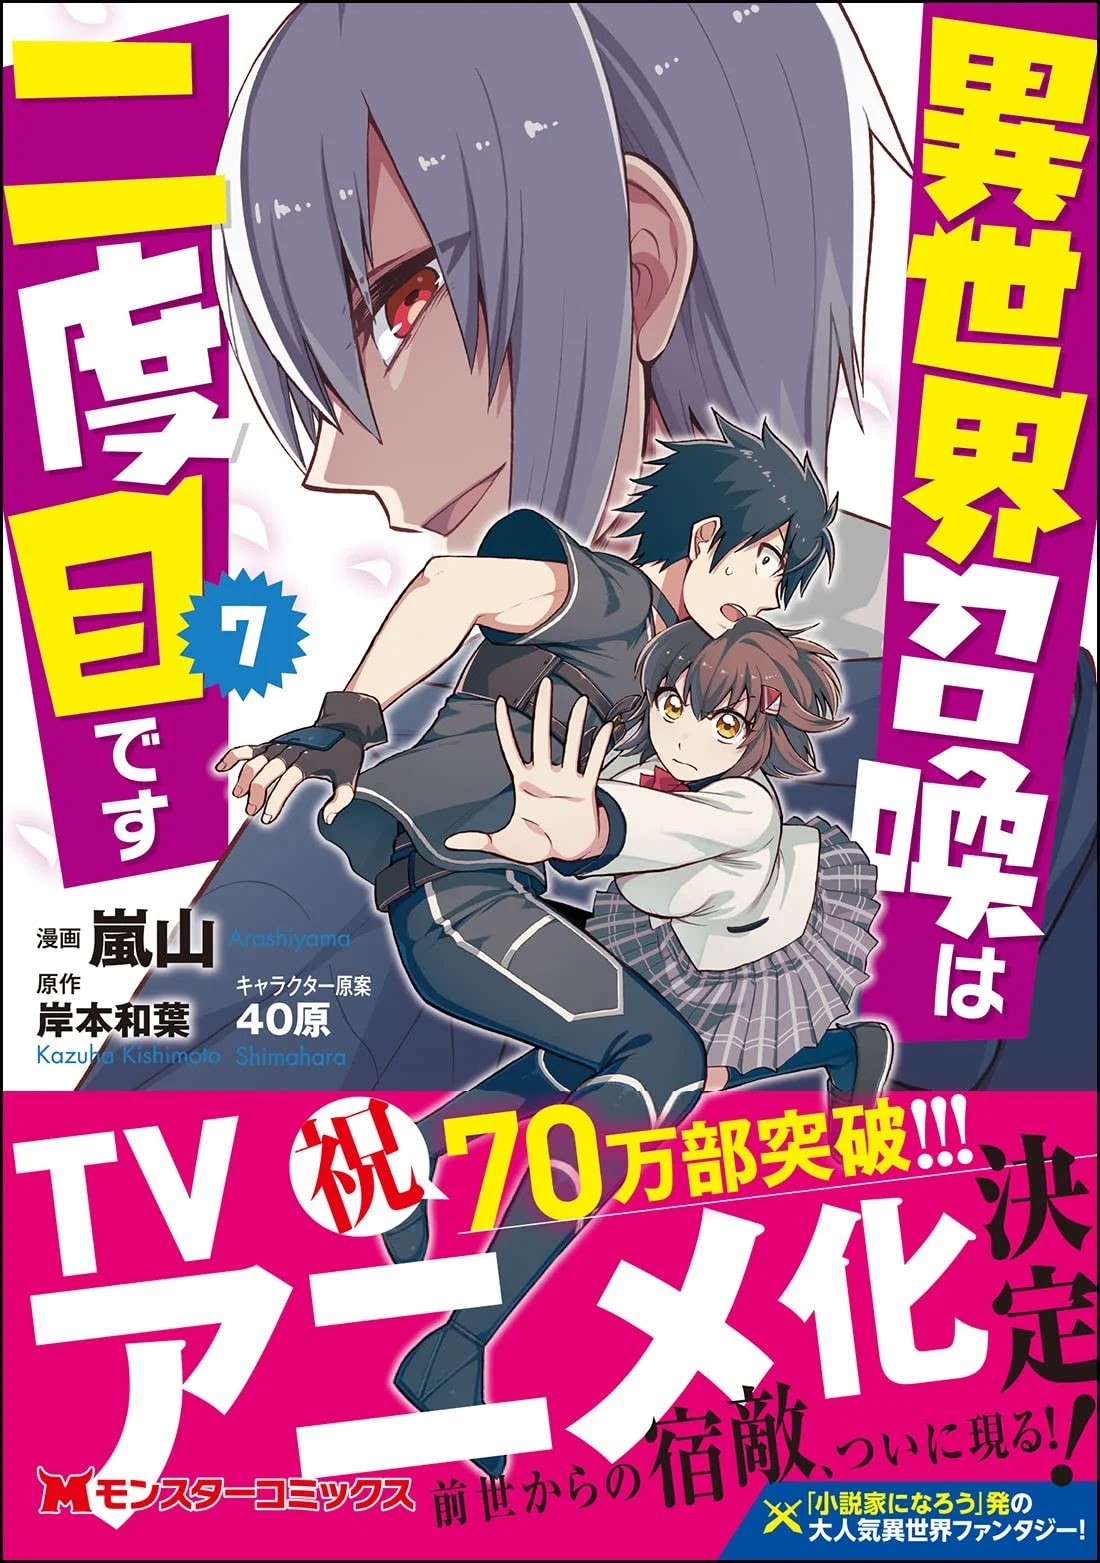 A Light novel Isekai Shoukan wa Nidome desu terá adaptação para Anime